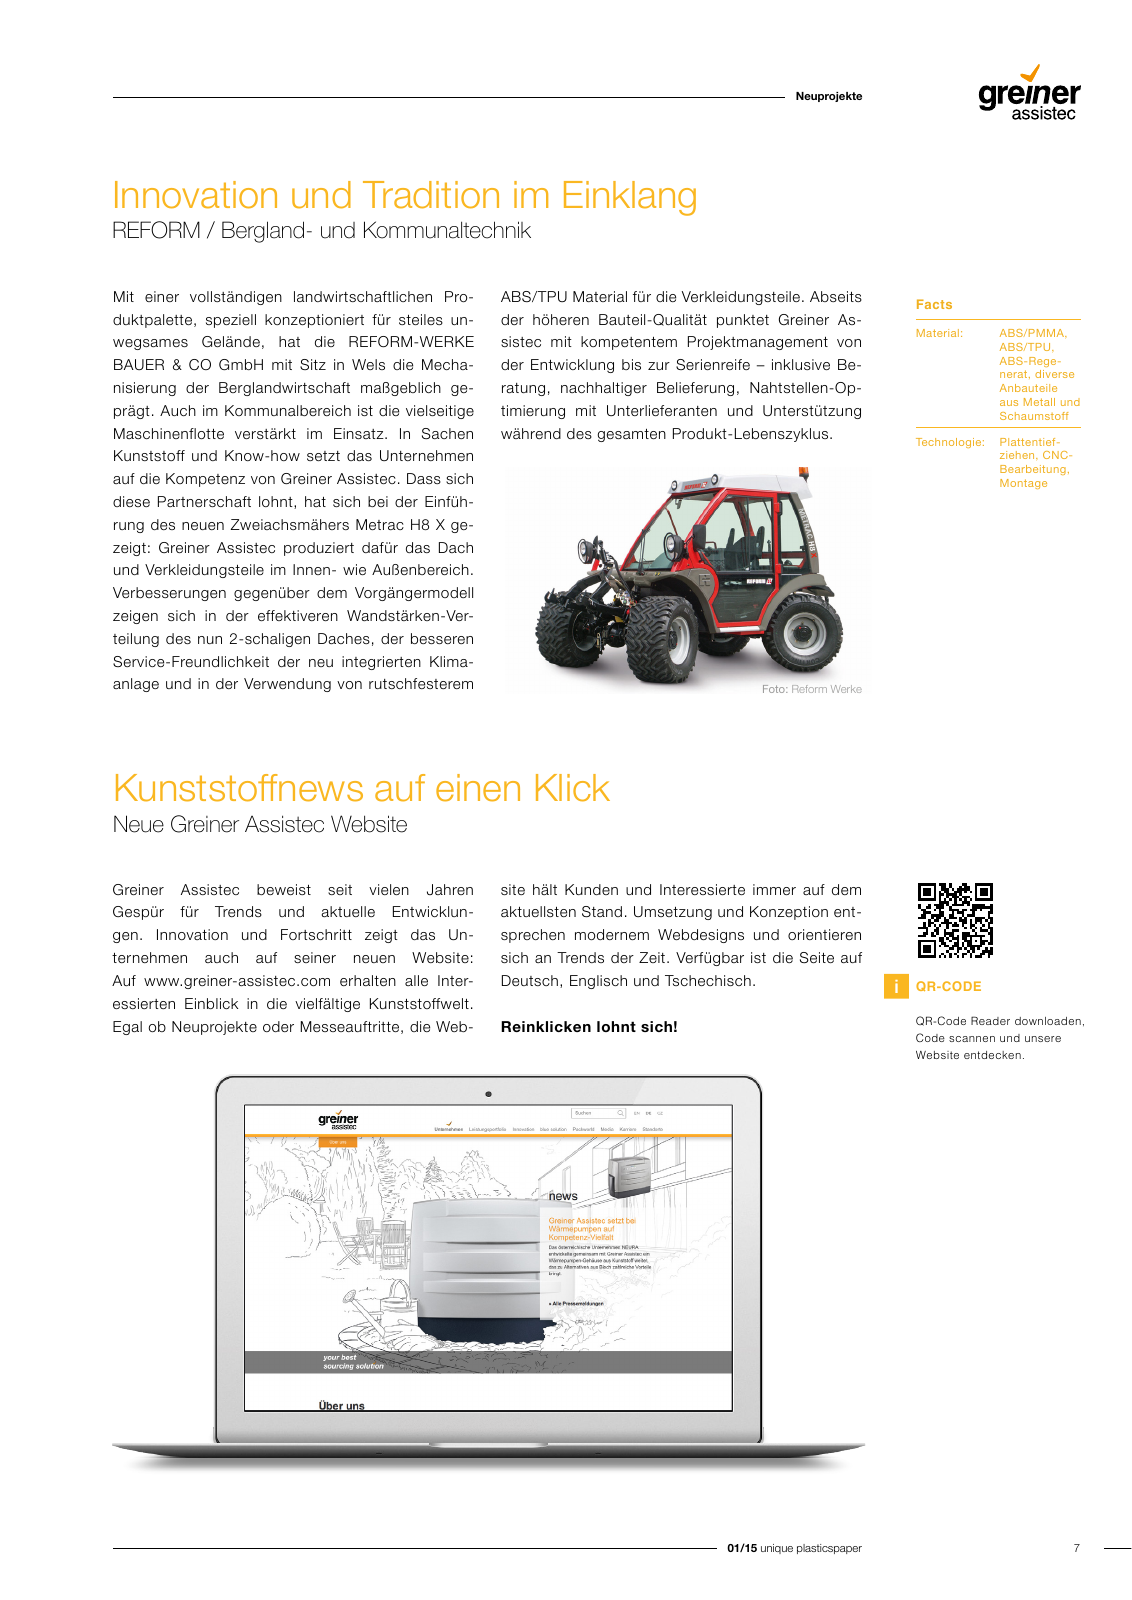 Vorschau WEB_Greiner_upp_assistec_1_DE_180615 Seite 7